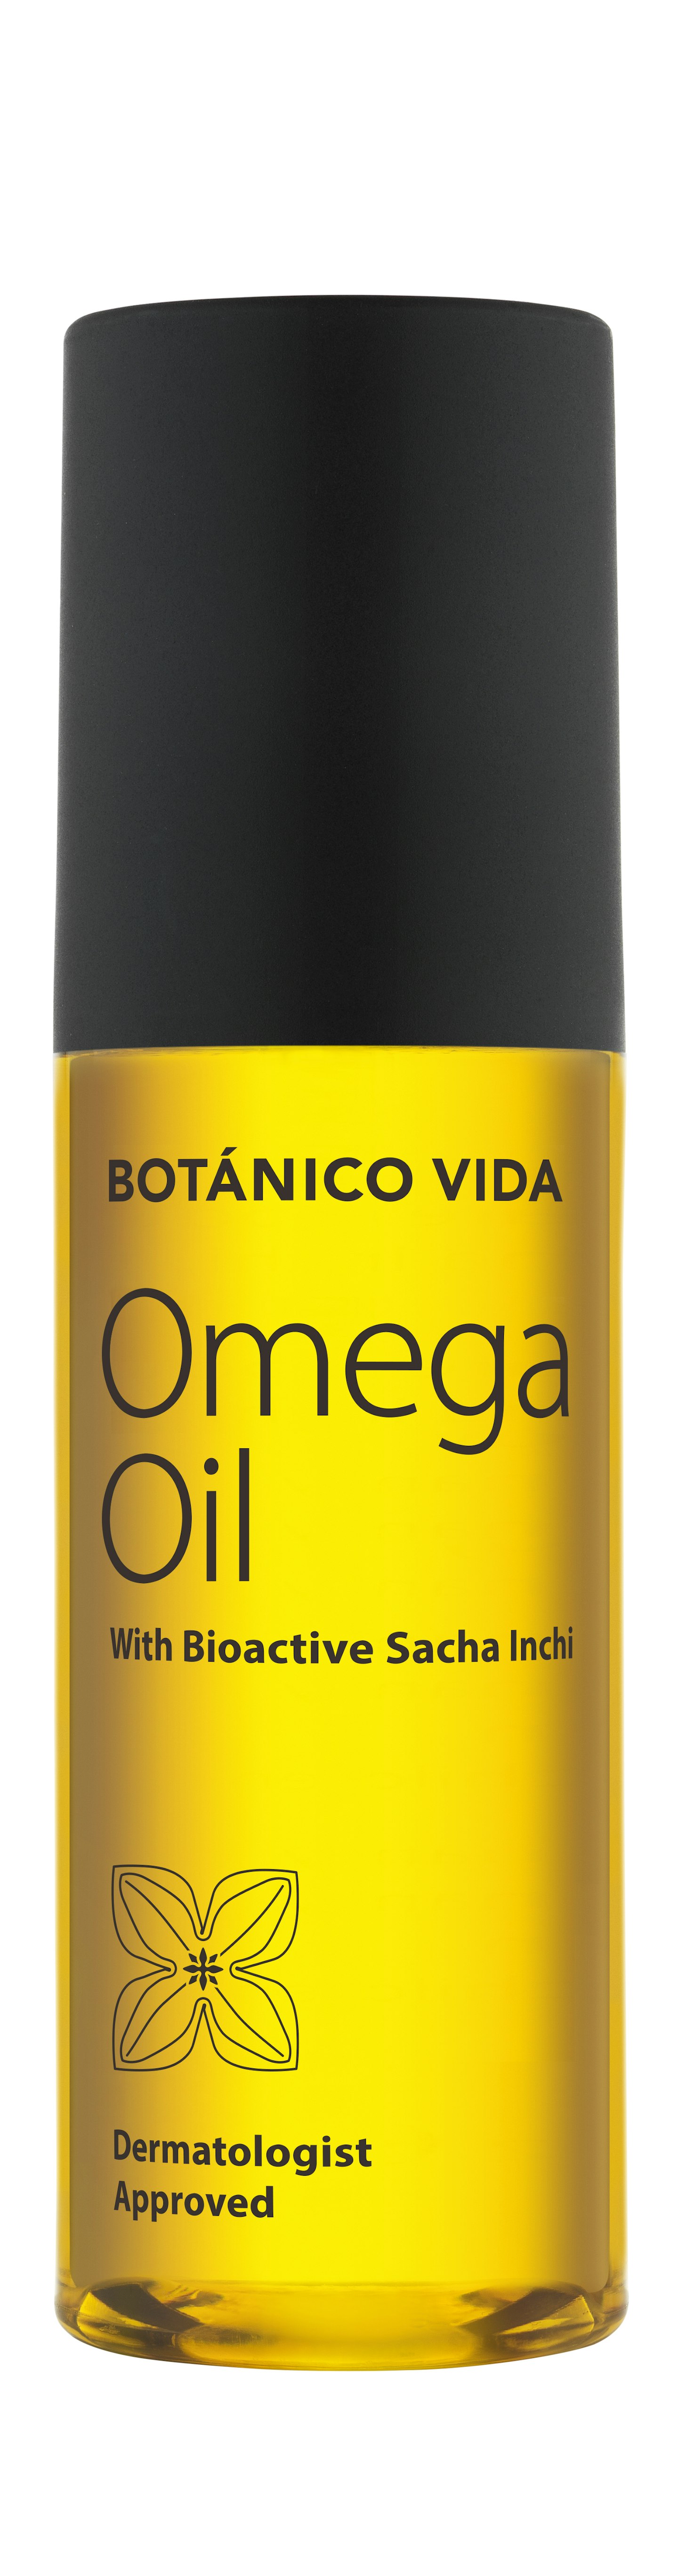 Botanico Vida Omega Oil